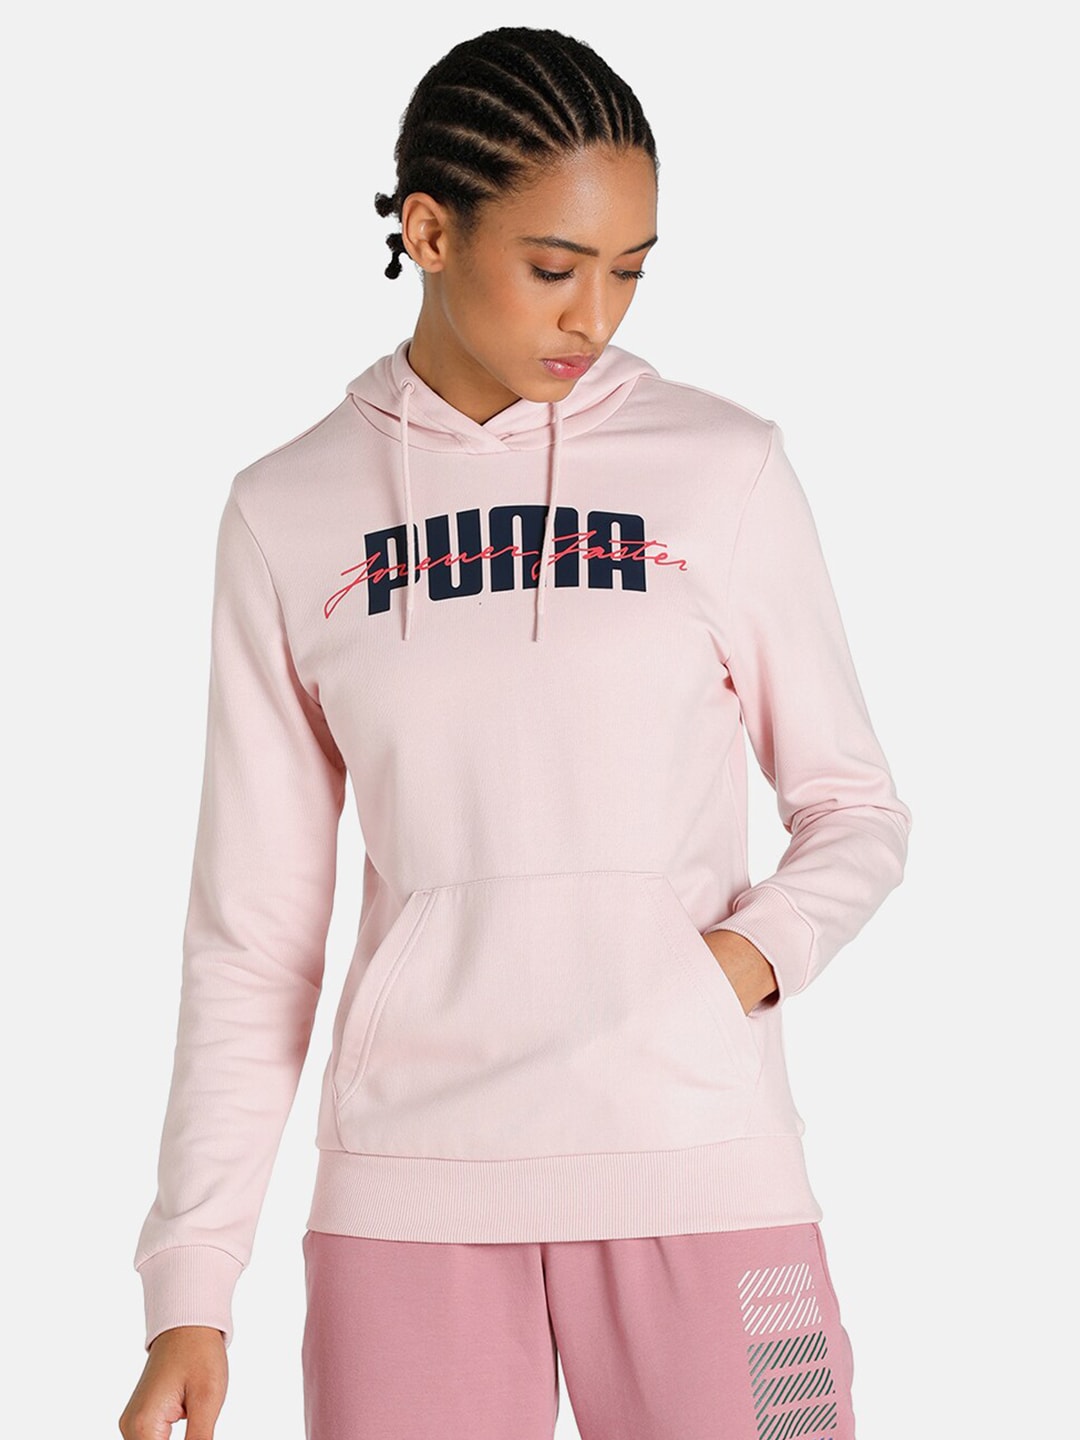 Puma Women Pink Printed Hooded Sweatshirt Price in India